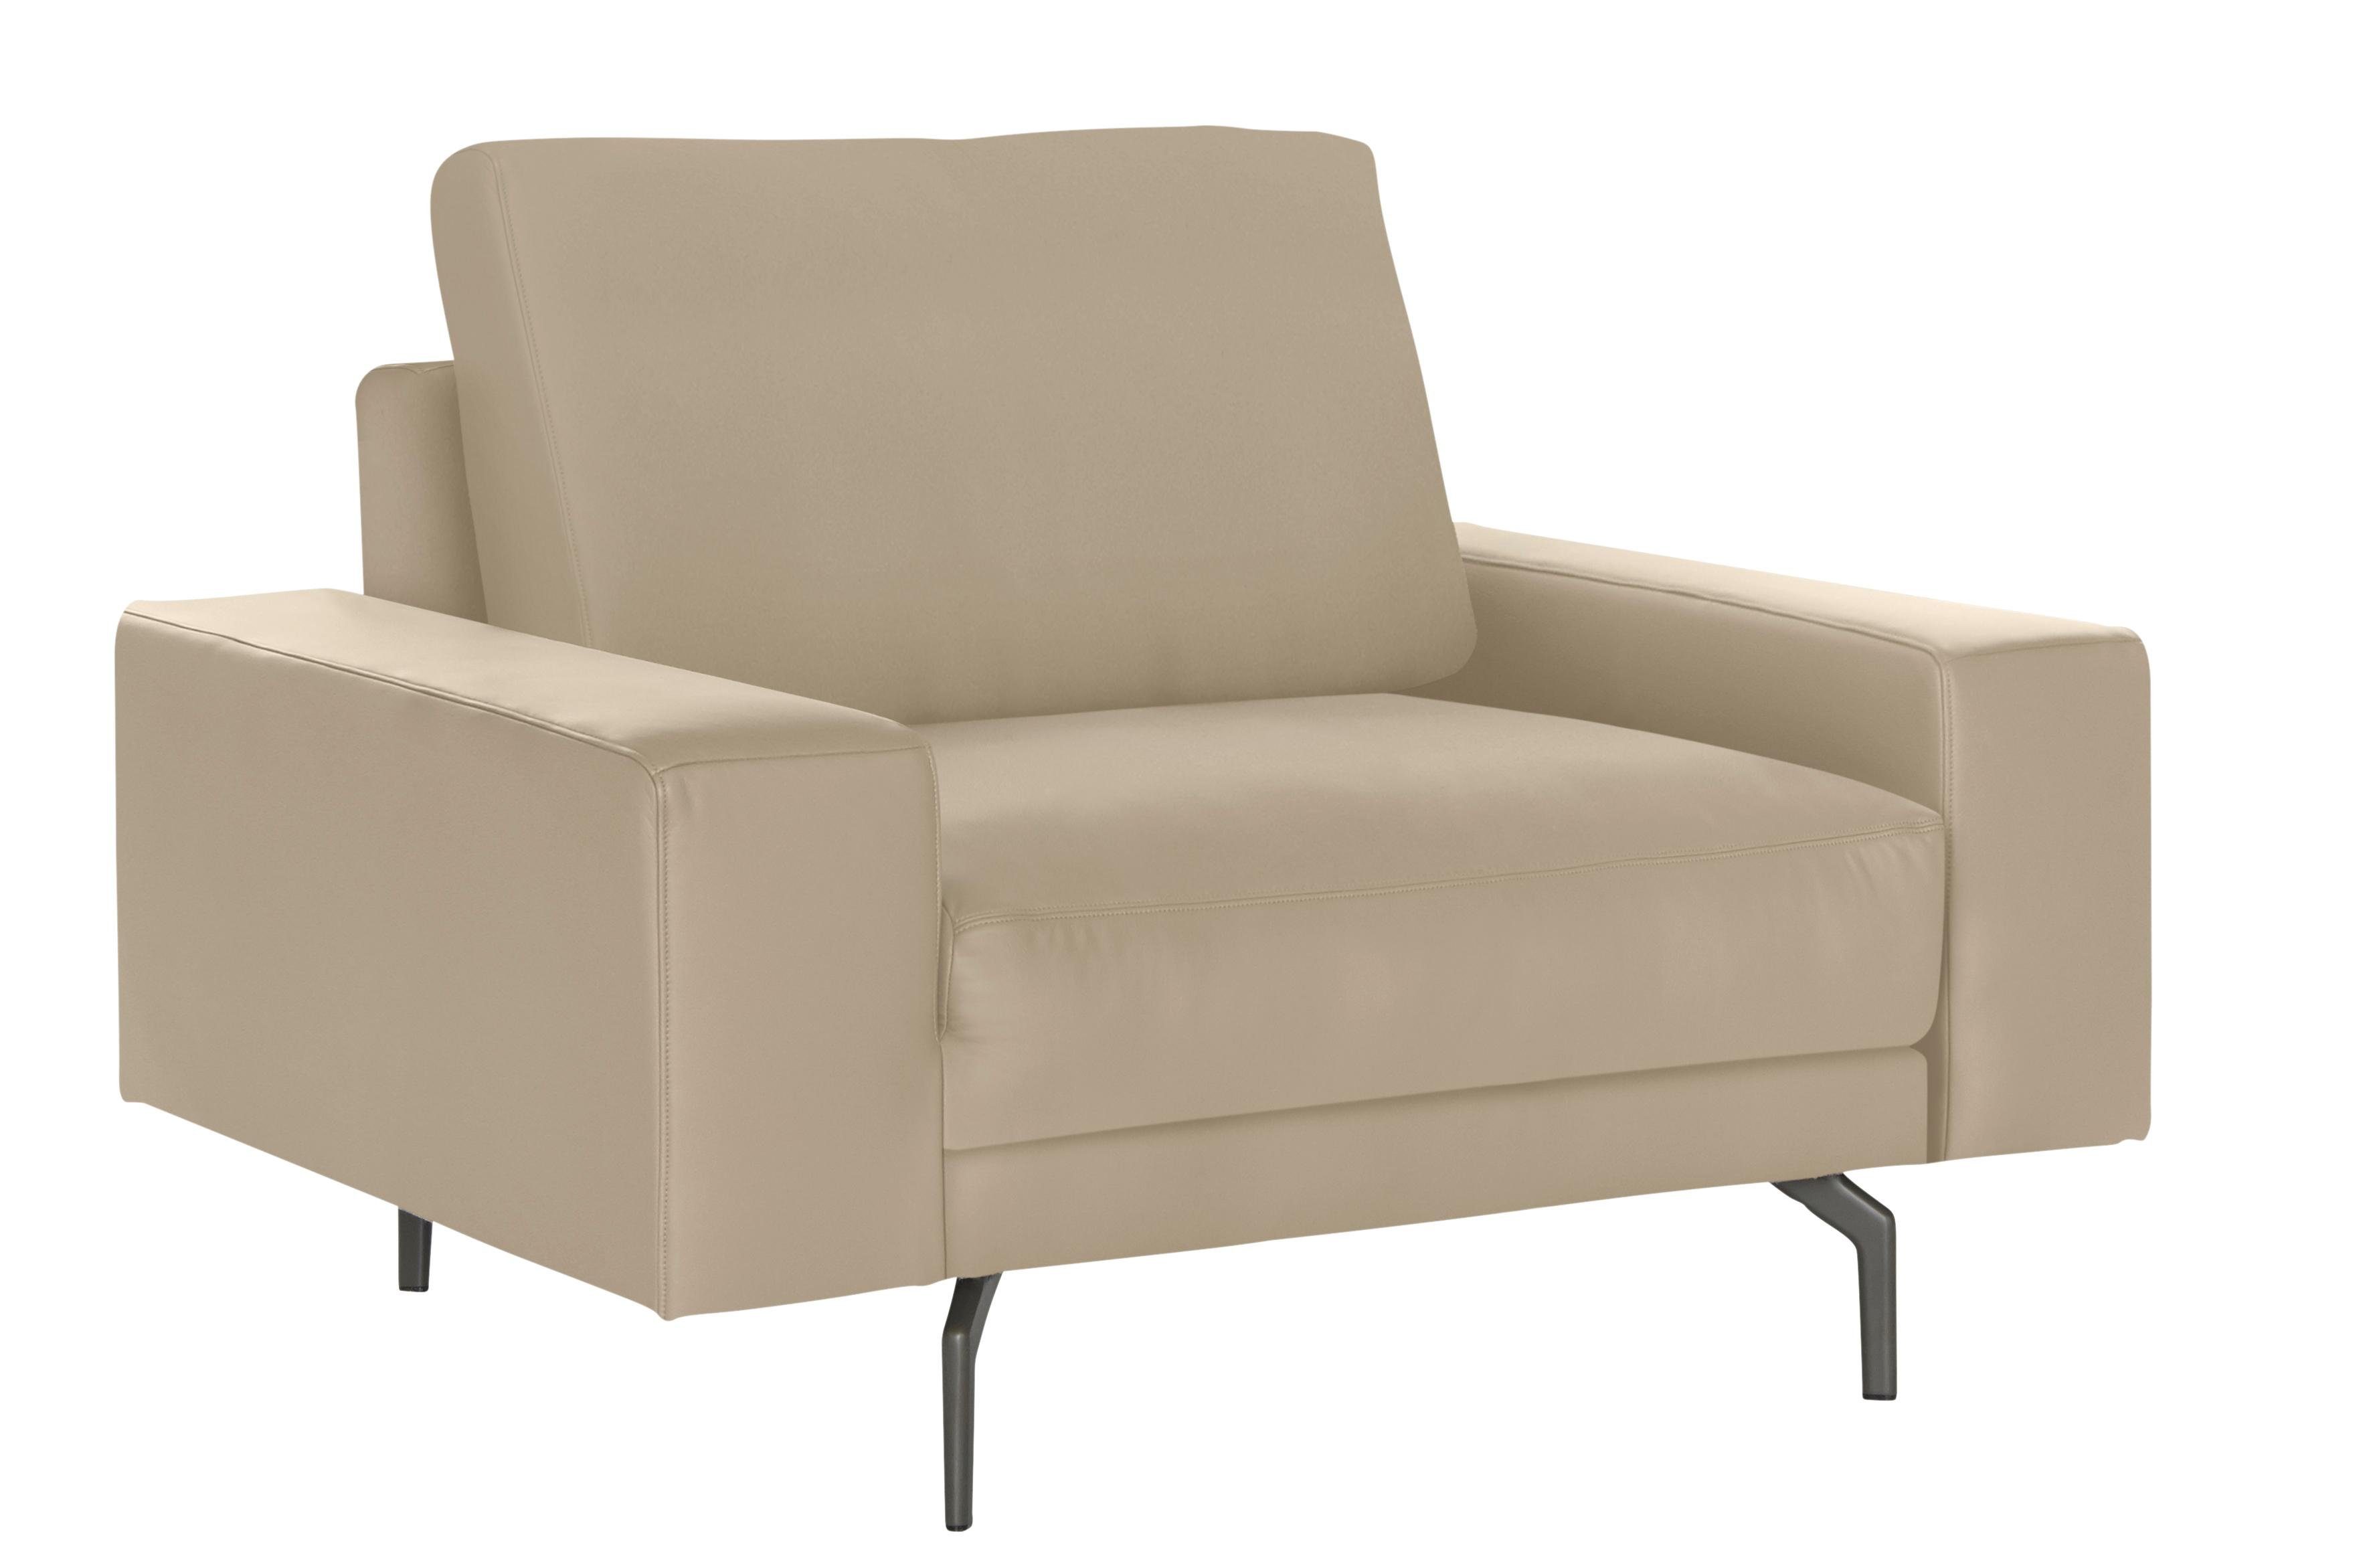 Breite breit umbragrau, Alugussfüße Armlehne sofa Sessel hs.450, niedrig, cm hülsta 120 in